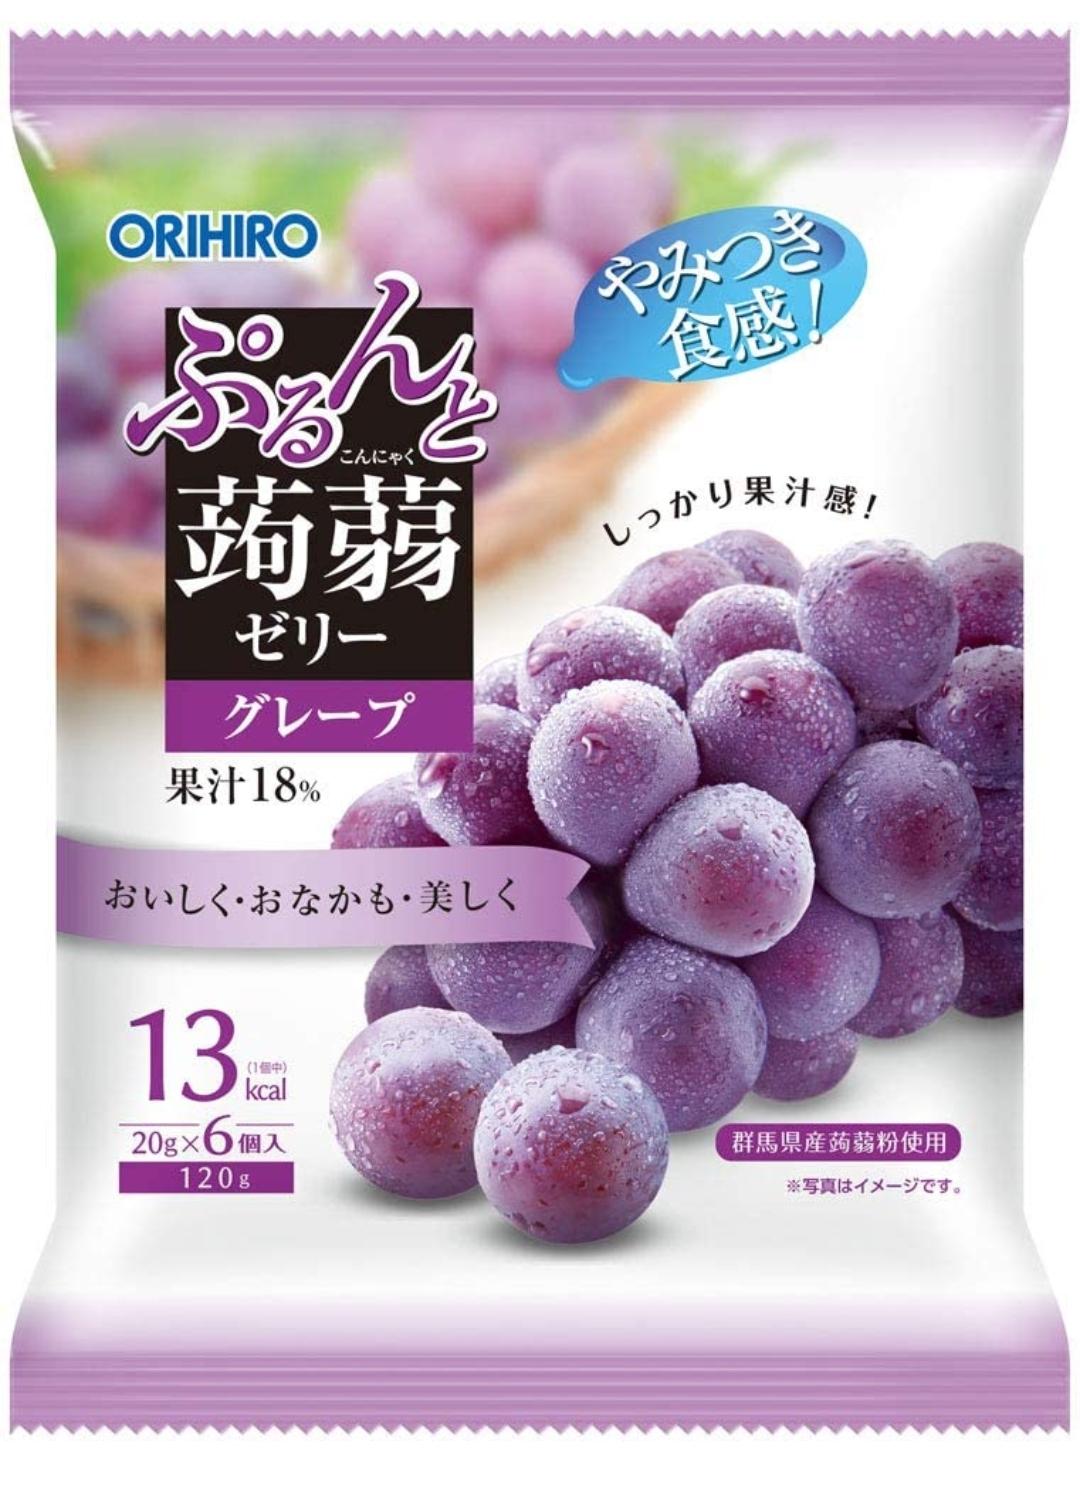 orihiro-konjac-jelly-grape-flavor